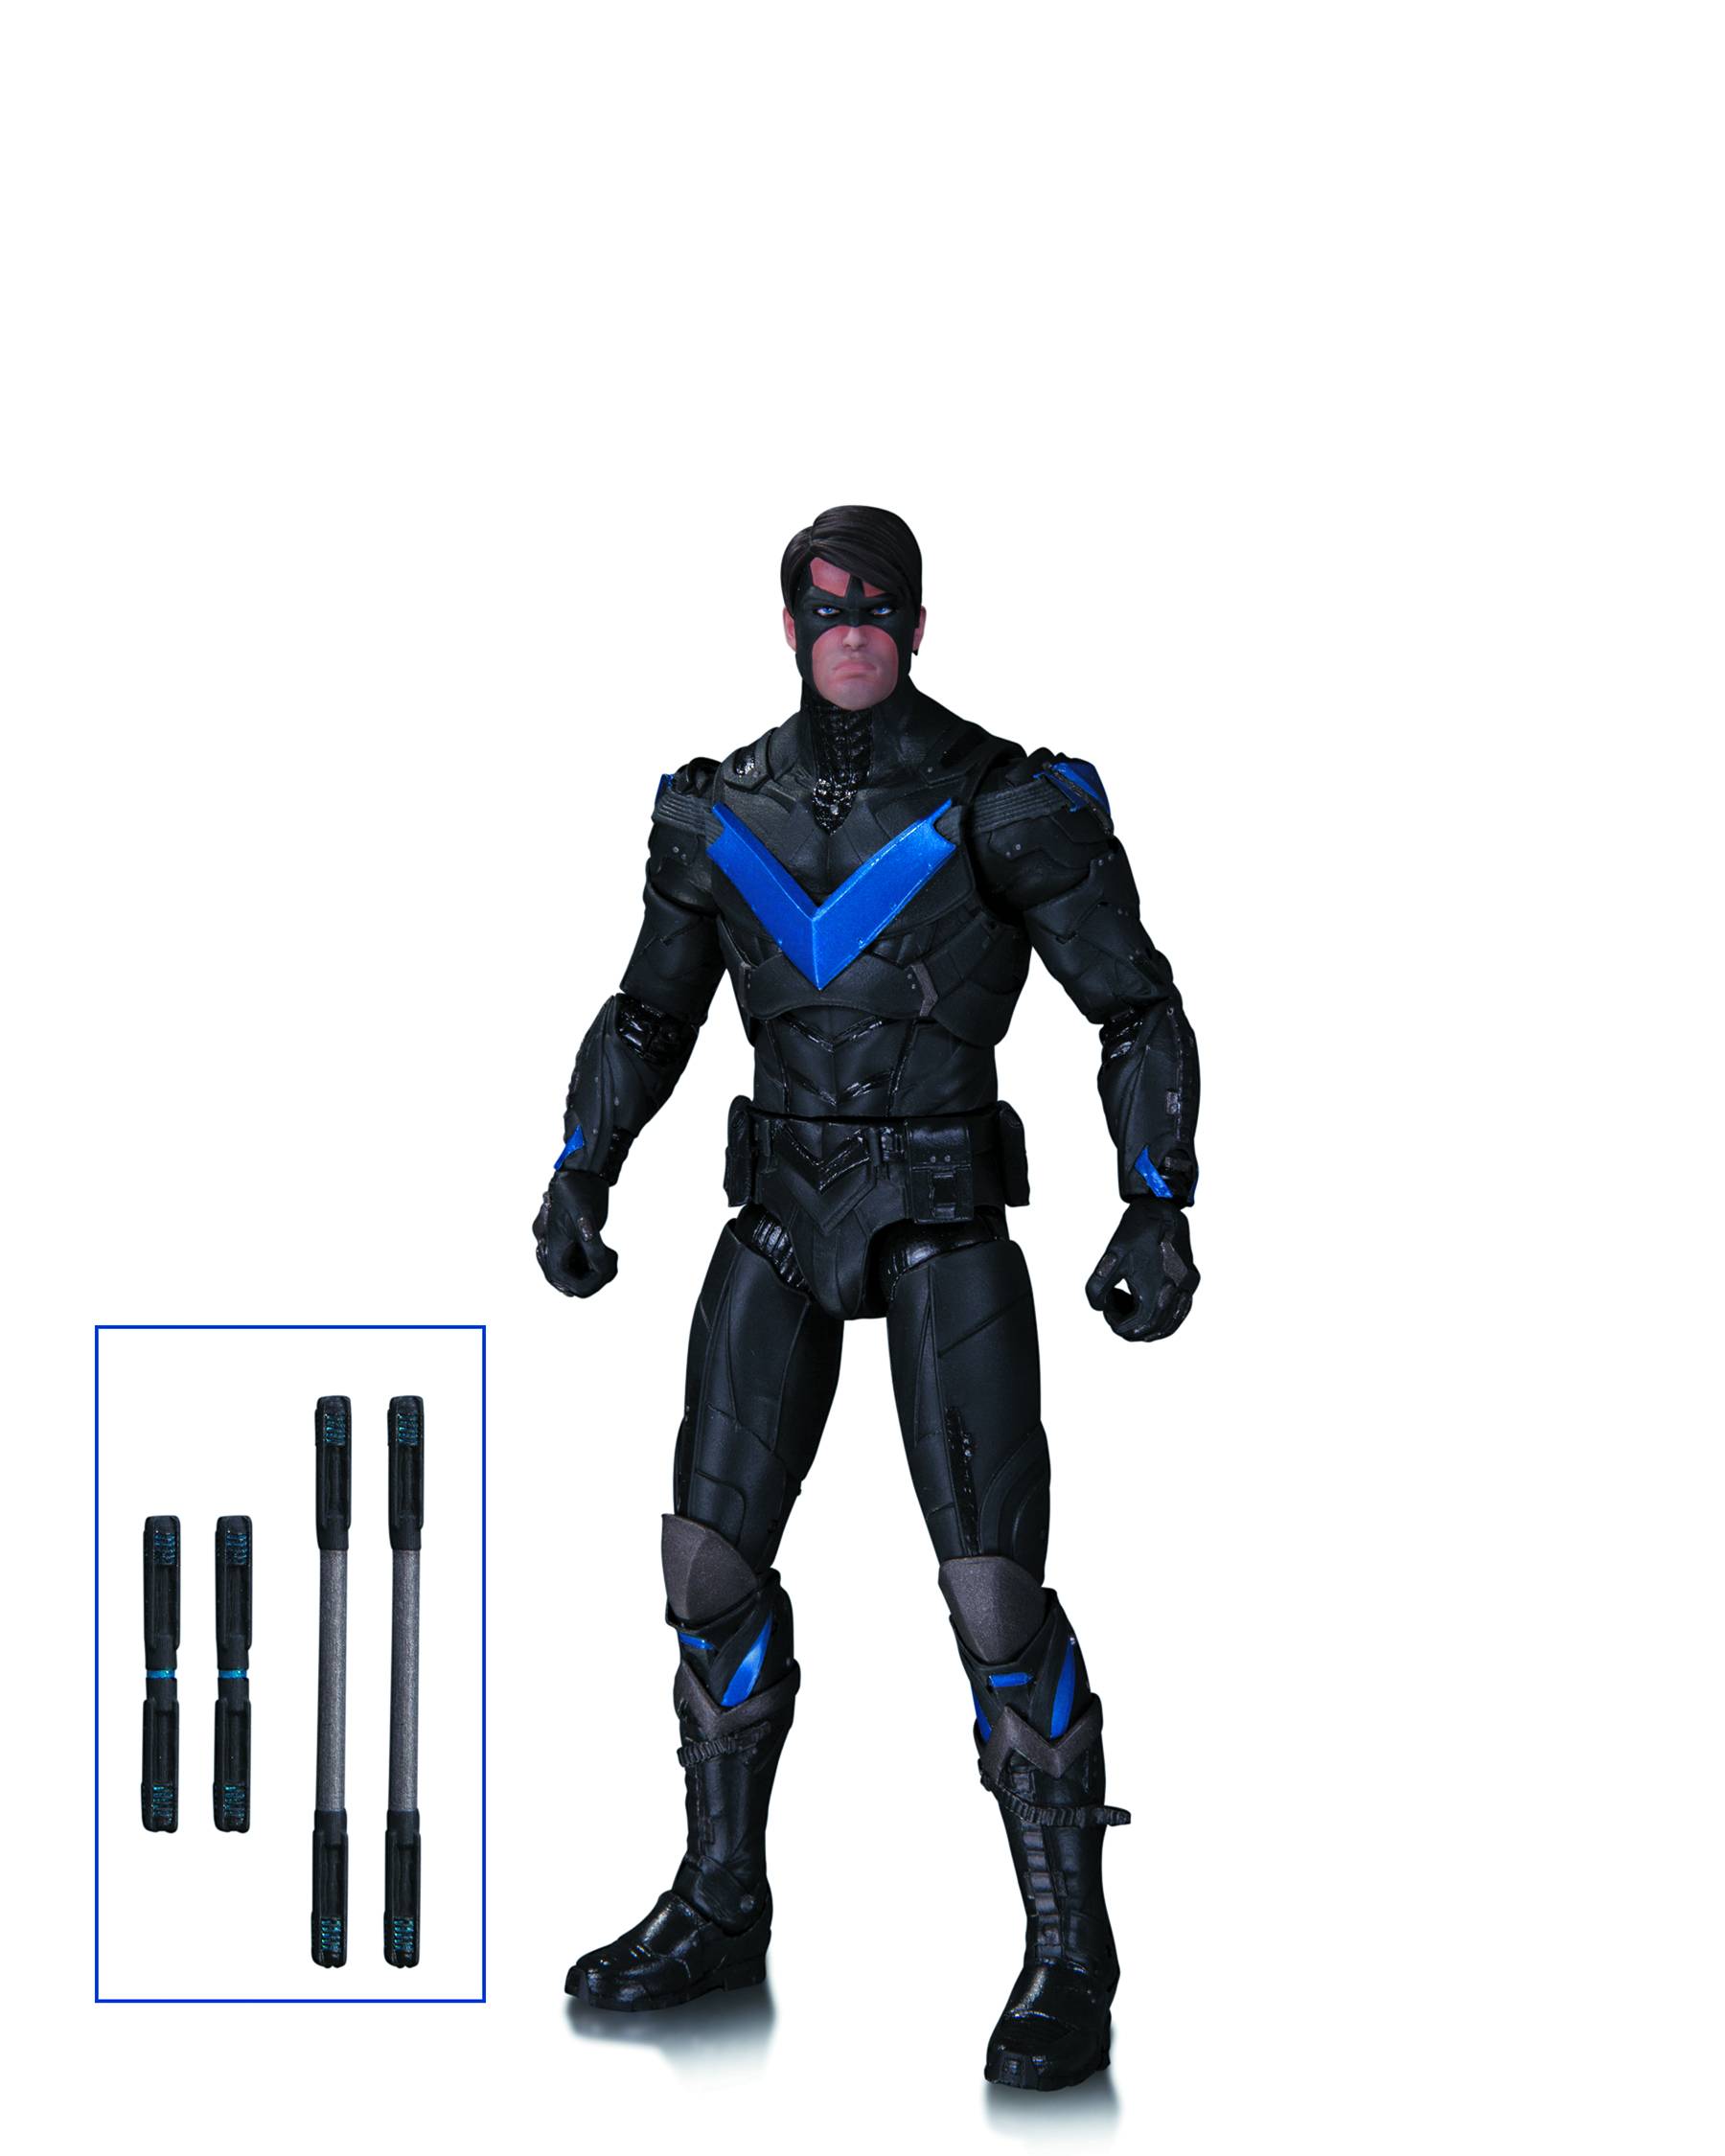 Batman Arkham Knight Nightwing Action Figure